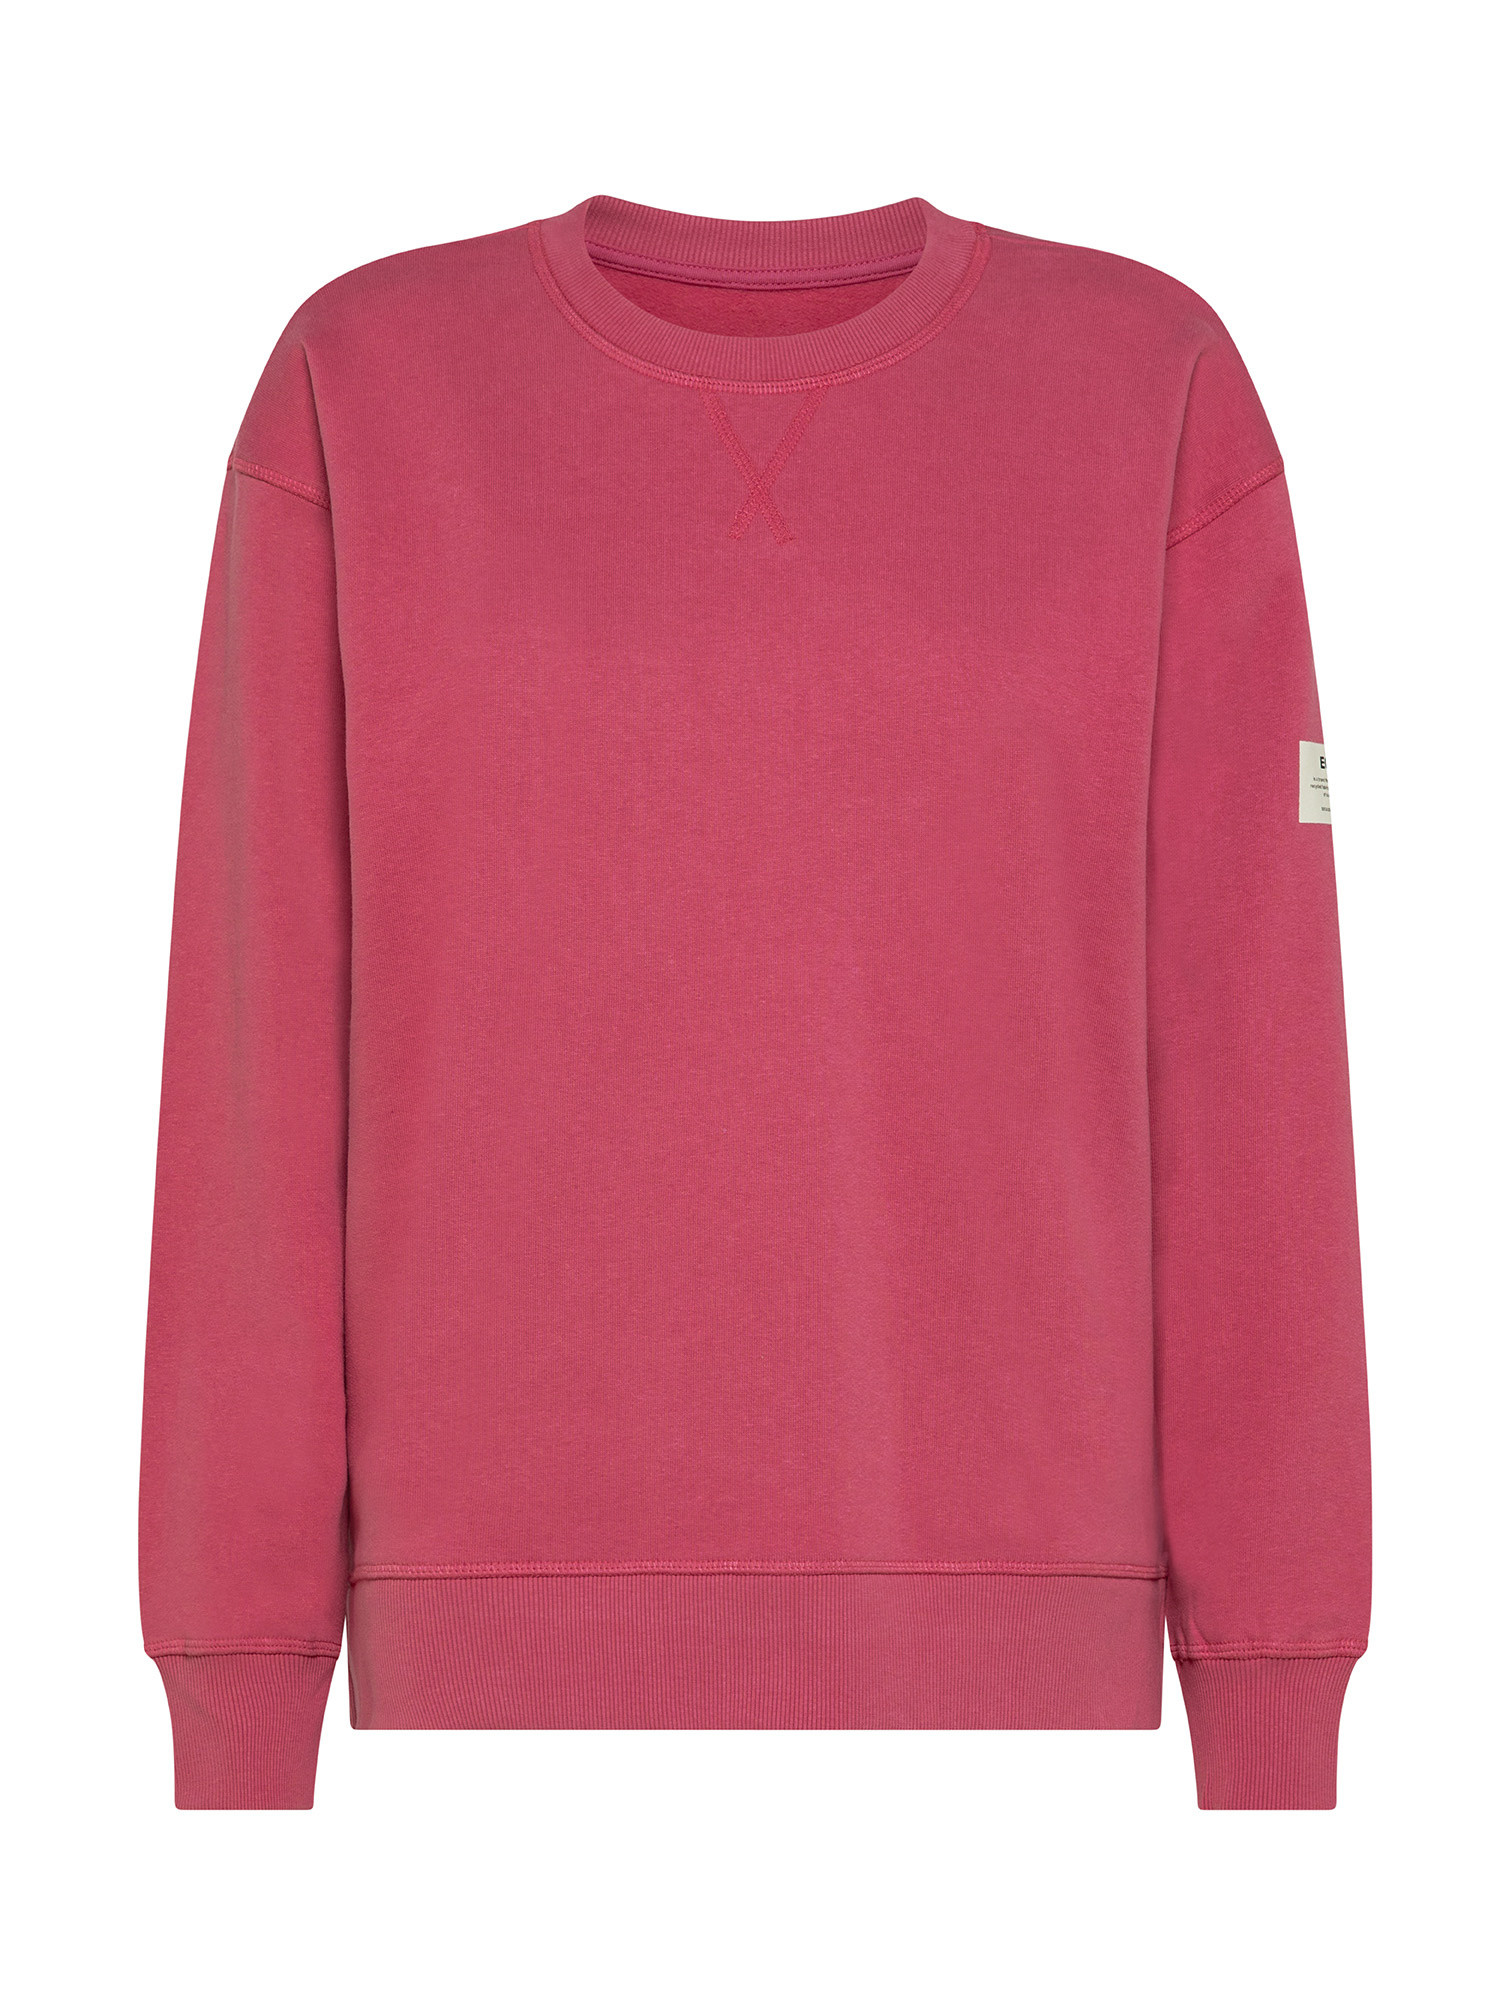 Ecoalf - Storm sweatshirt with print, Dark Pink, large image number 0